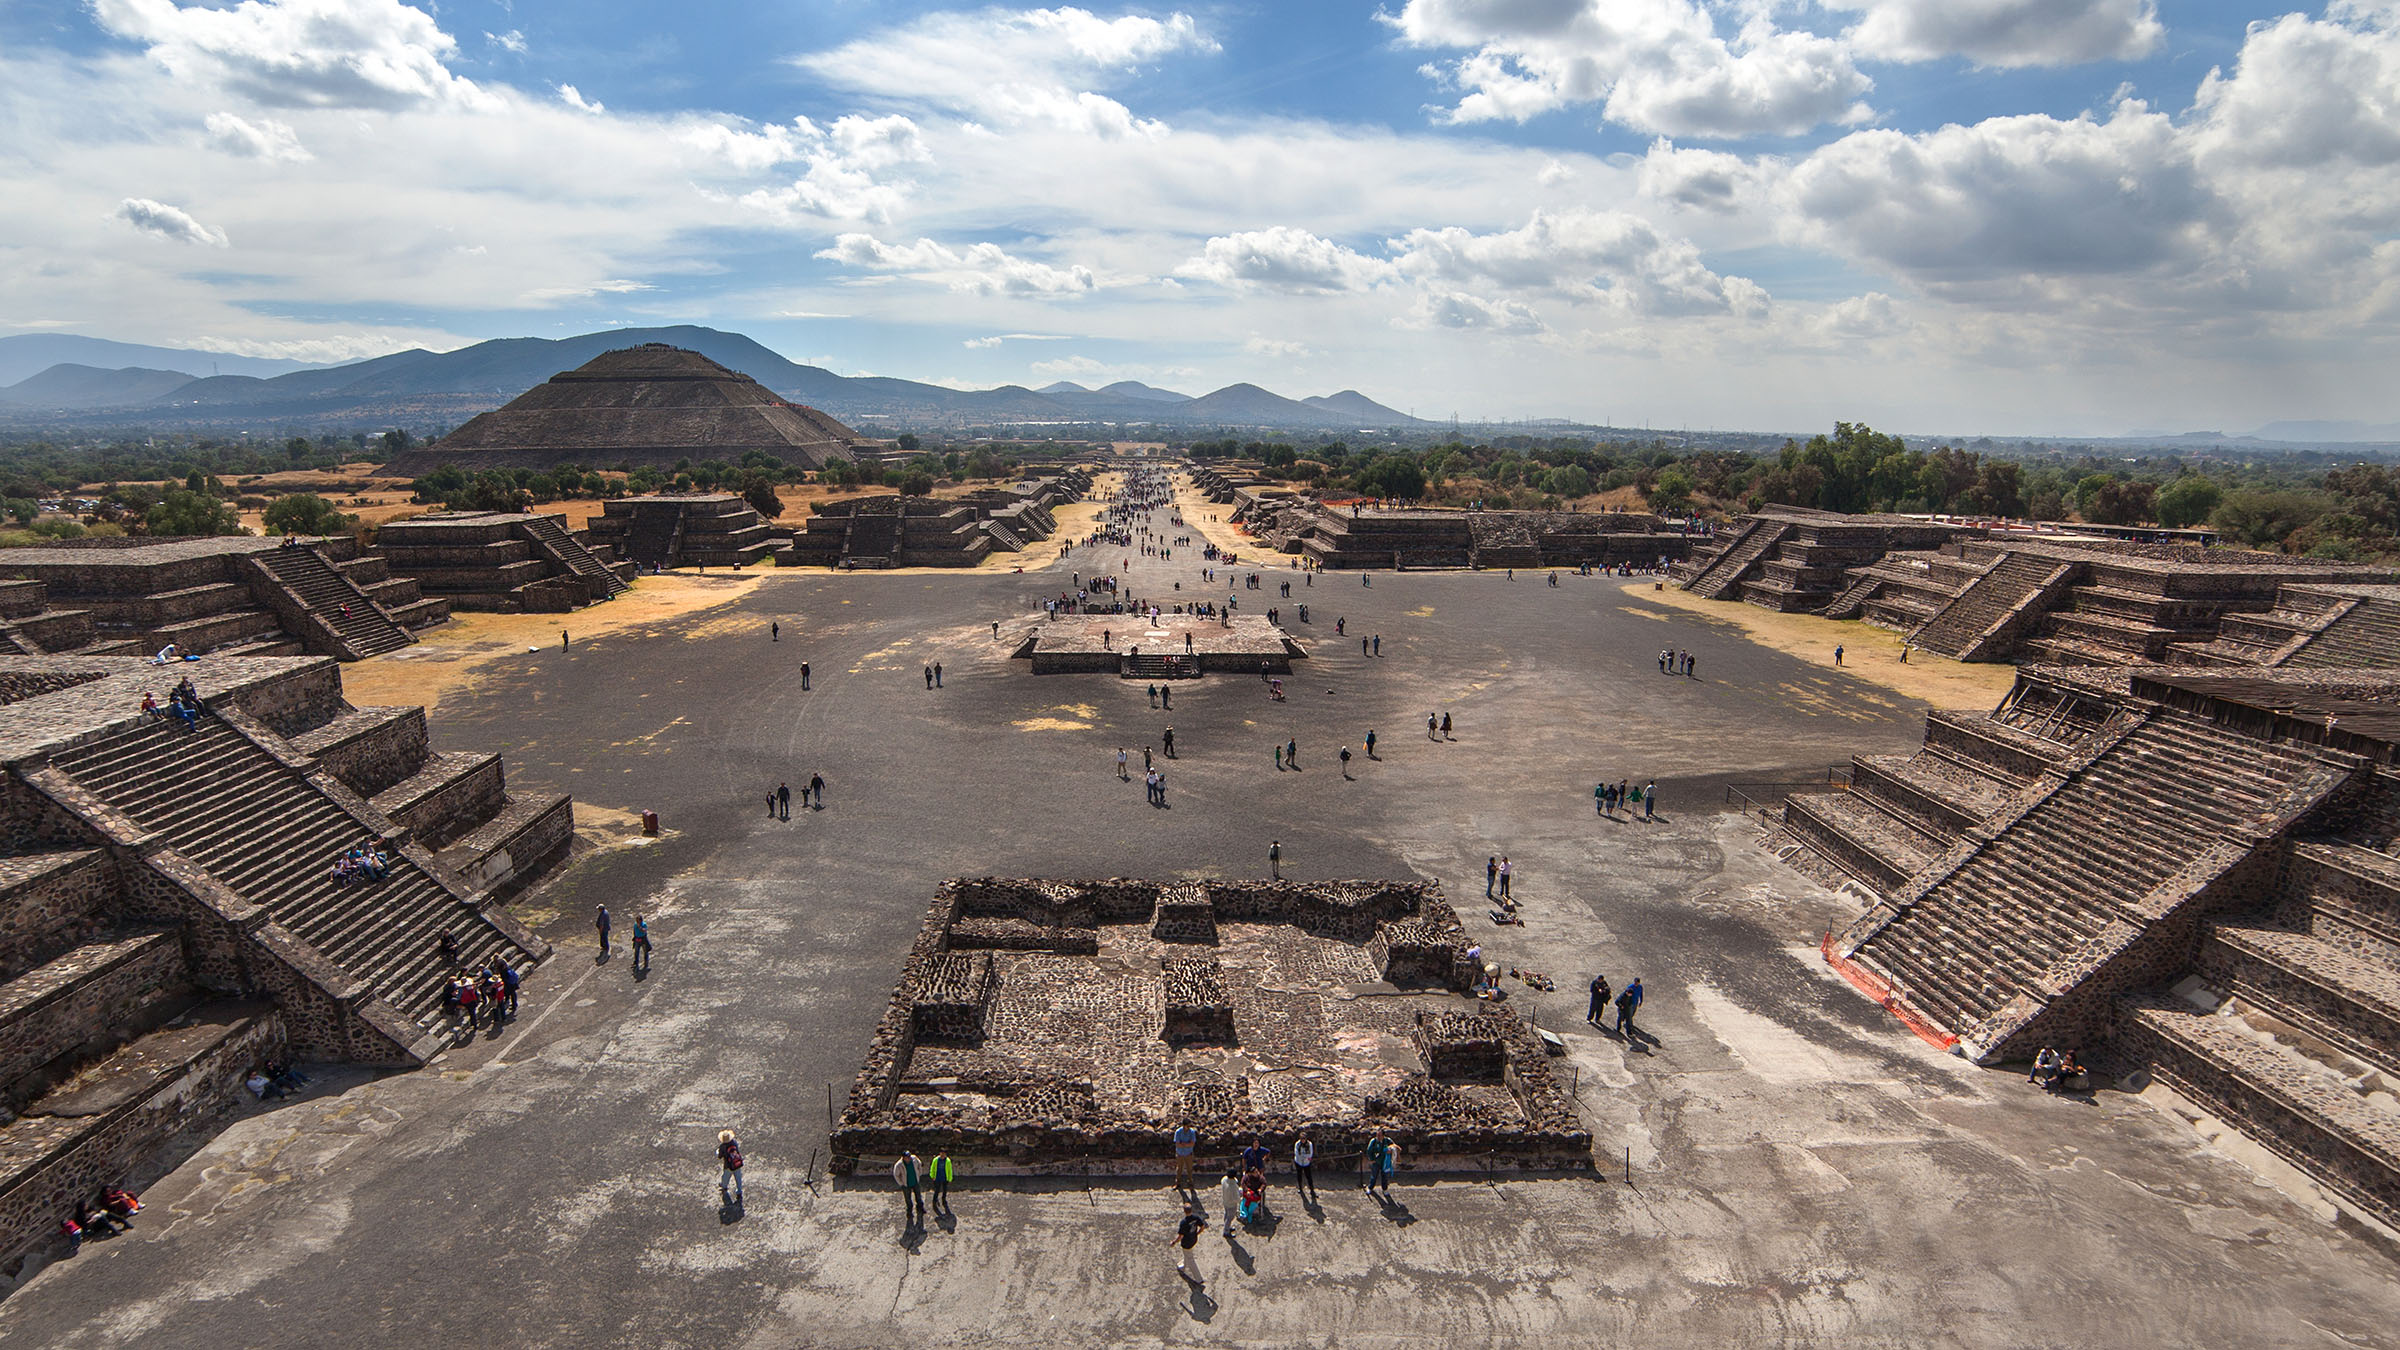 The Gods' Walk in Teotihuacan